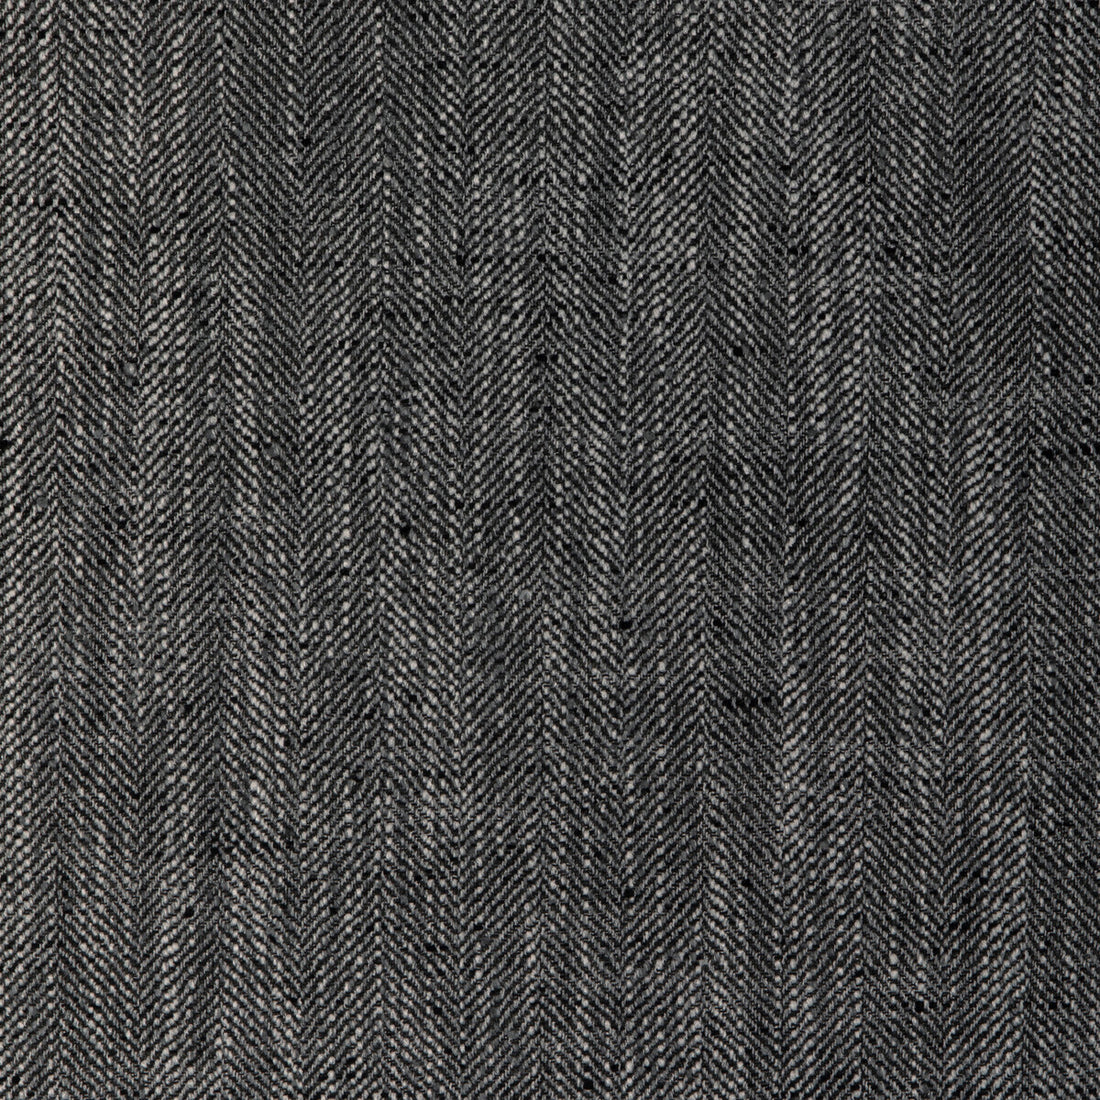 Kravet Smart fabric in 36674-811 color - pattern 36674.811.0 - by Kravet Smart in the Performance Kravetarmor collection